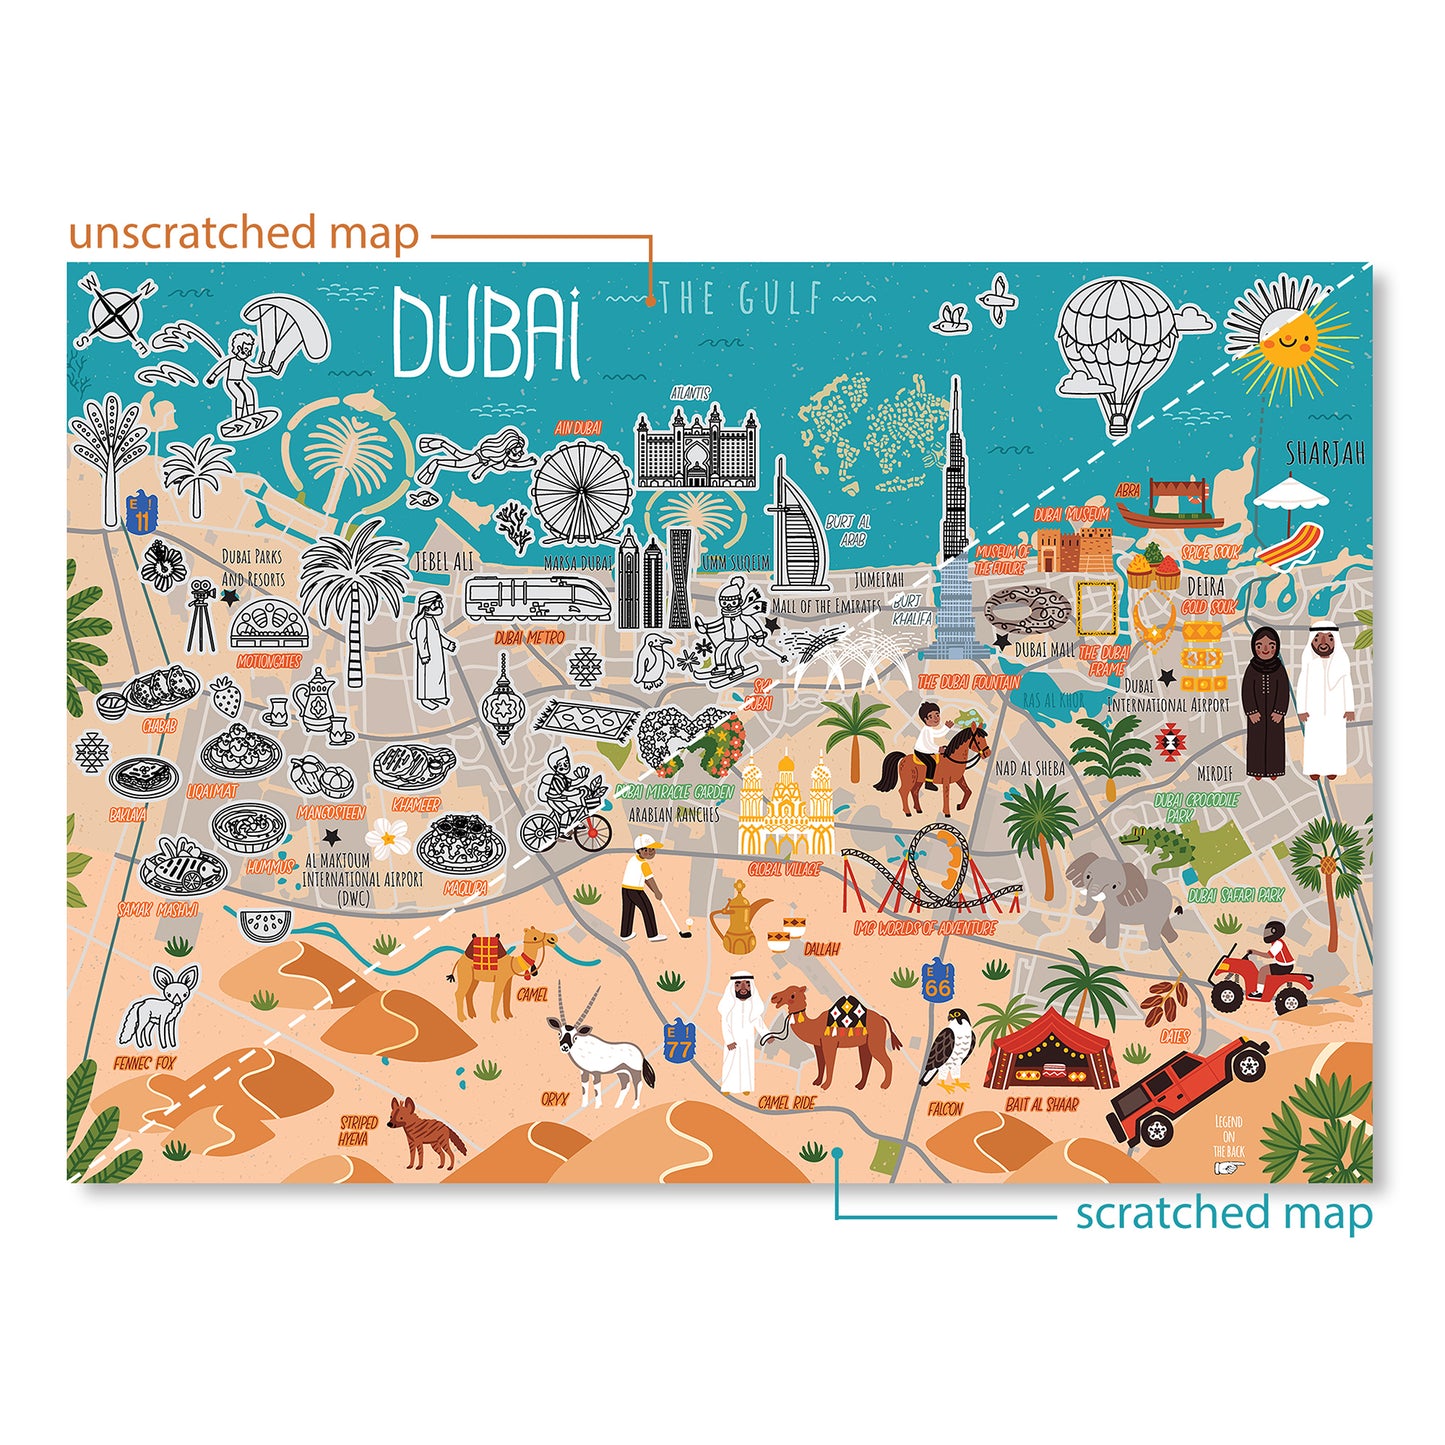 Dubai pictographic scratch off map